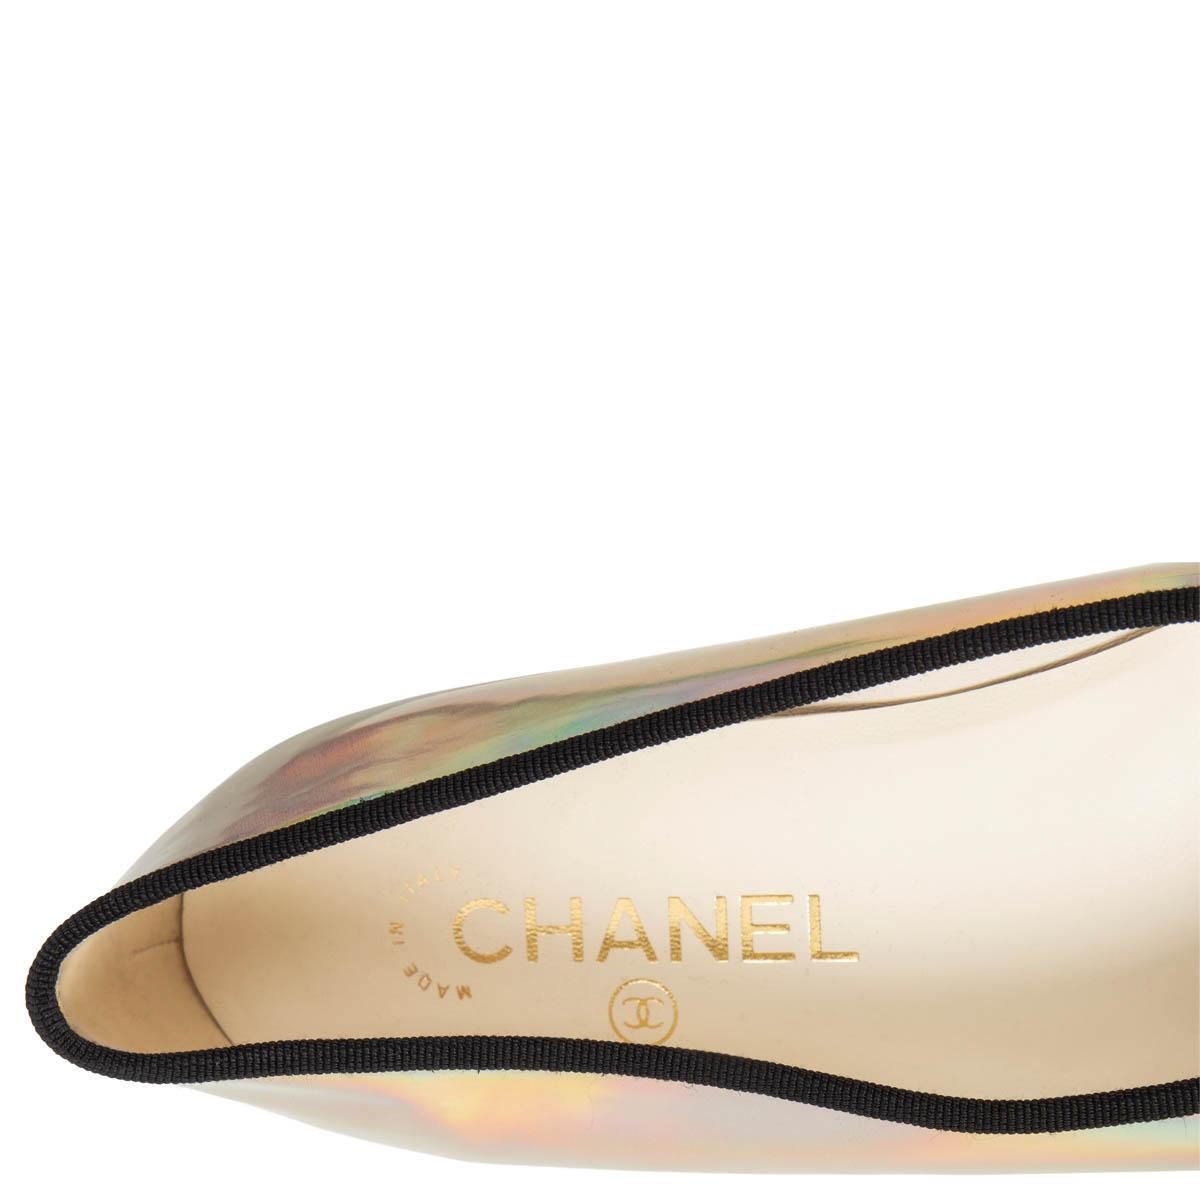 Beige CHANEL rainbow iridescent 2018 CLASSIC Ballet Flats Shoes 38.5